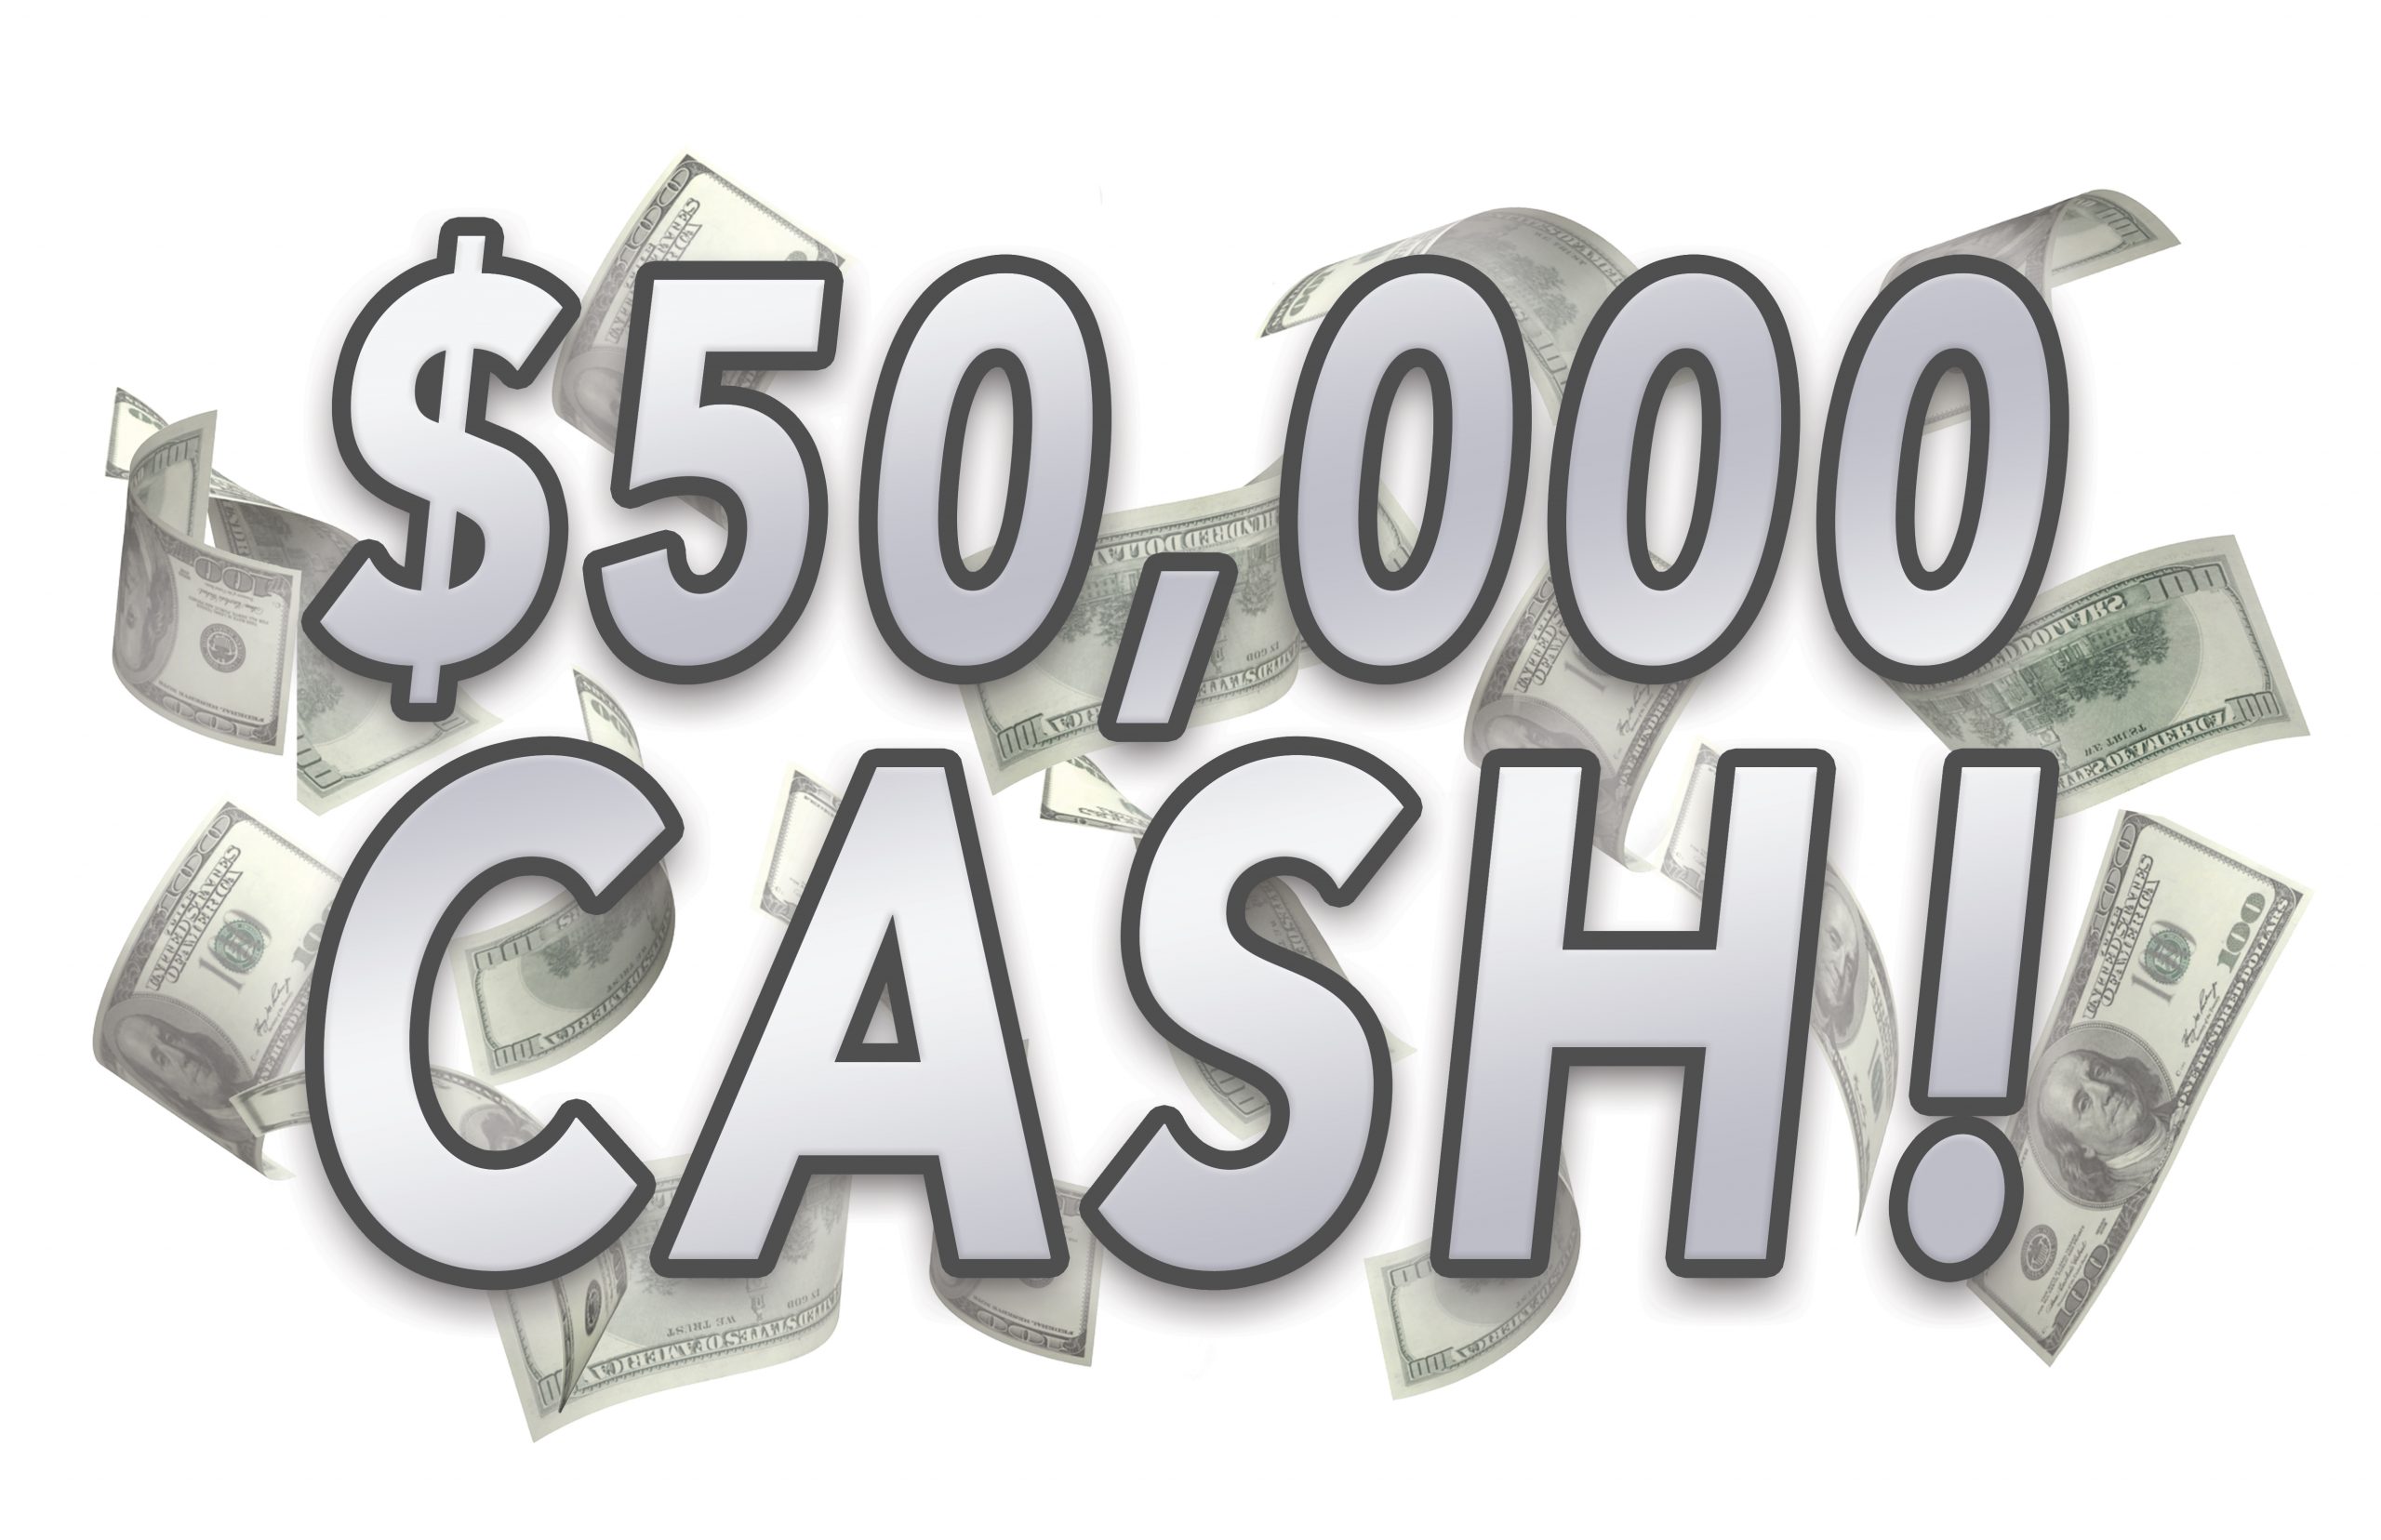 $50,000 Cash, ½ to Winner & ½ to Charity